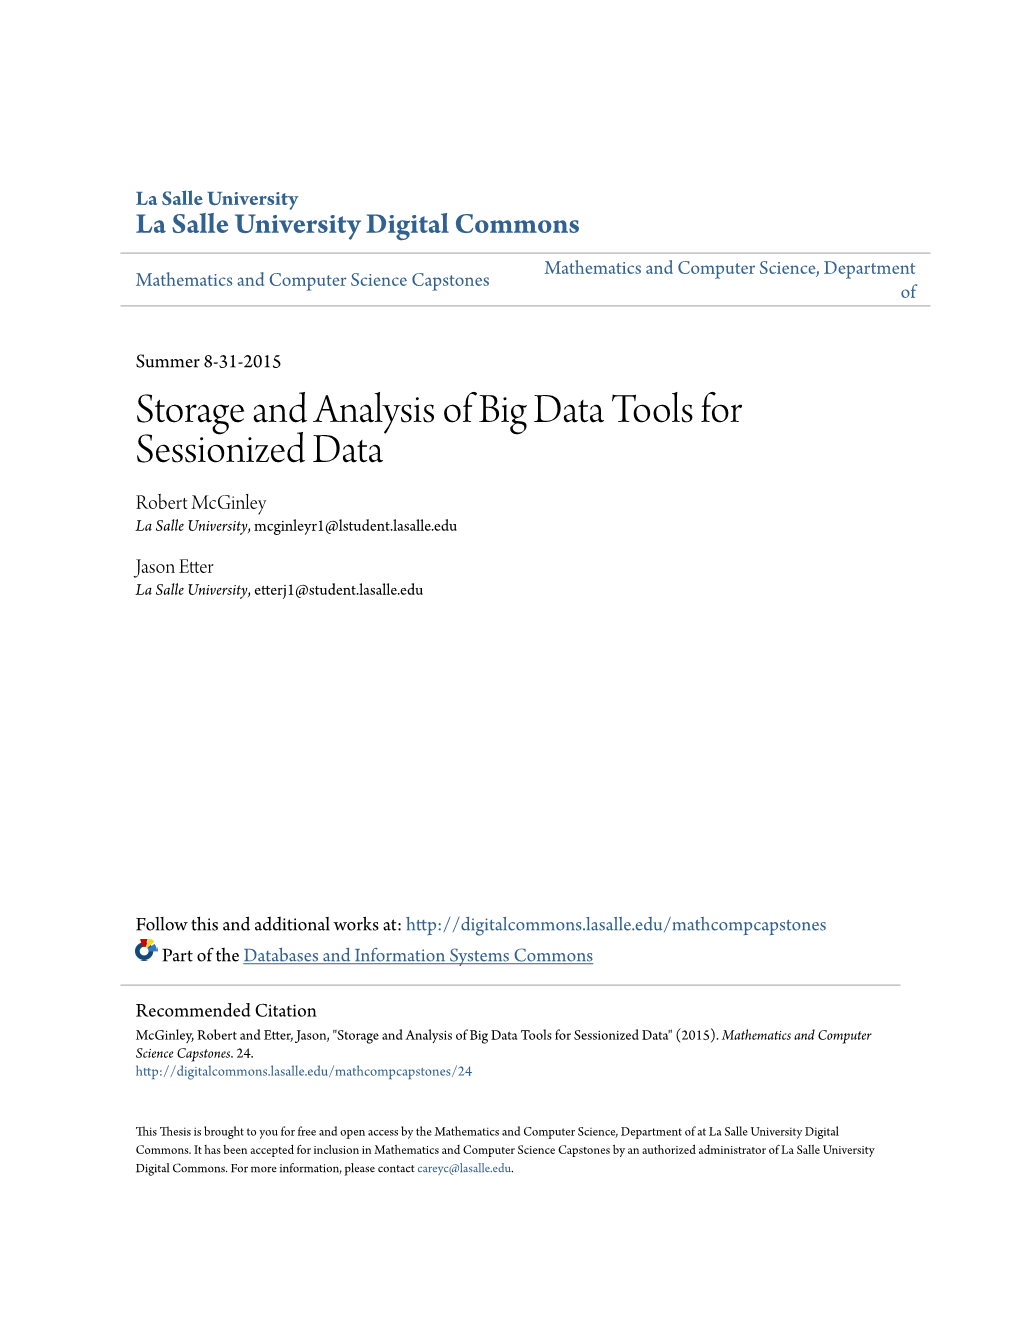 Storage and Analysis of Big Data Tools for Sessionized Data Robert Mcginley La Salle University, Mcginleyr1@Lstudent.Lasalle.Edu